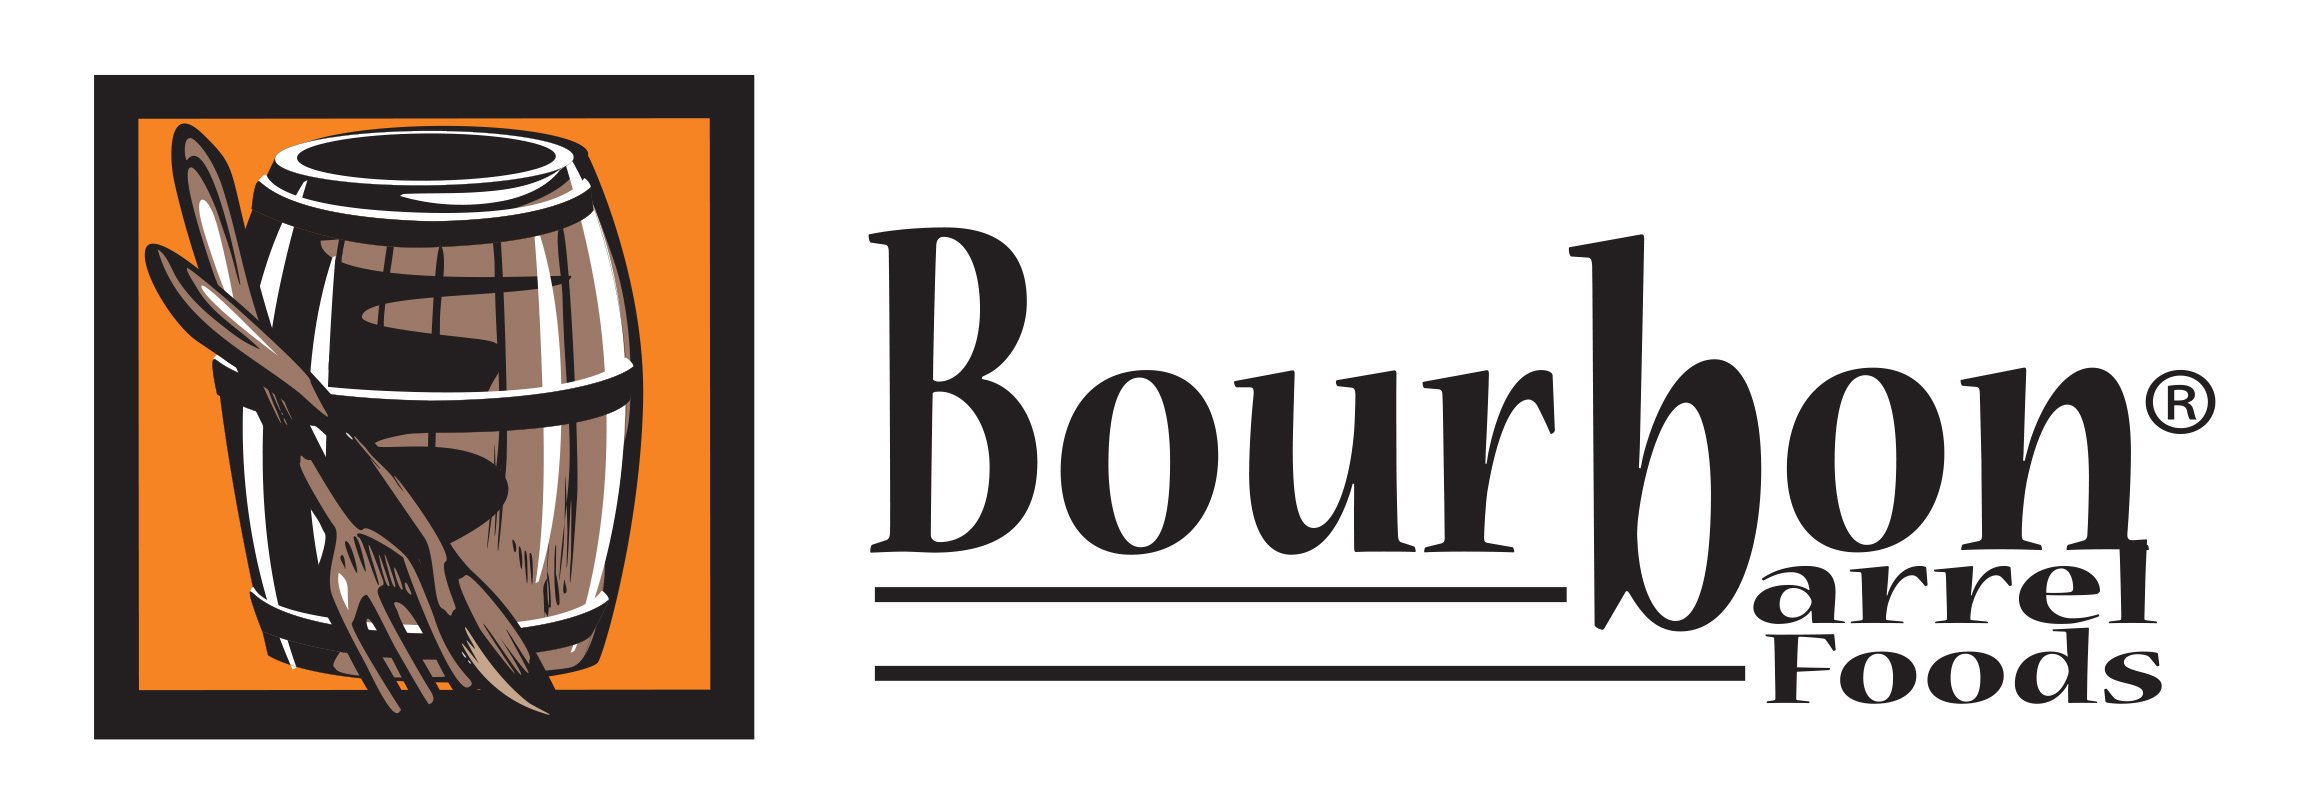 BBF_Logo_Horizontal-1